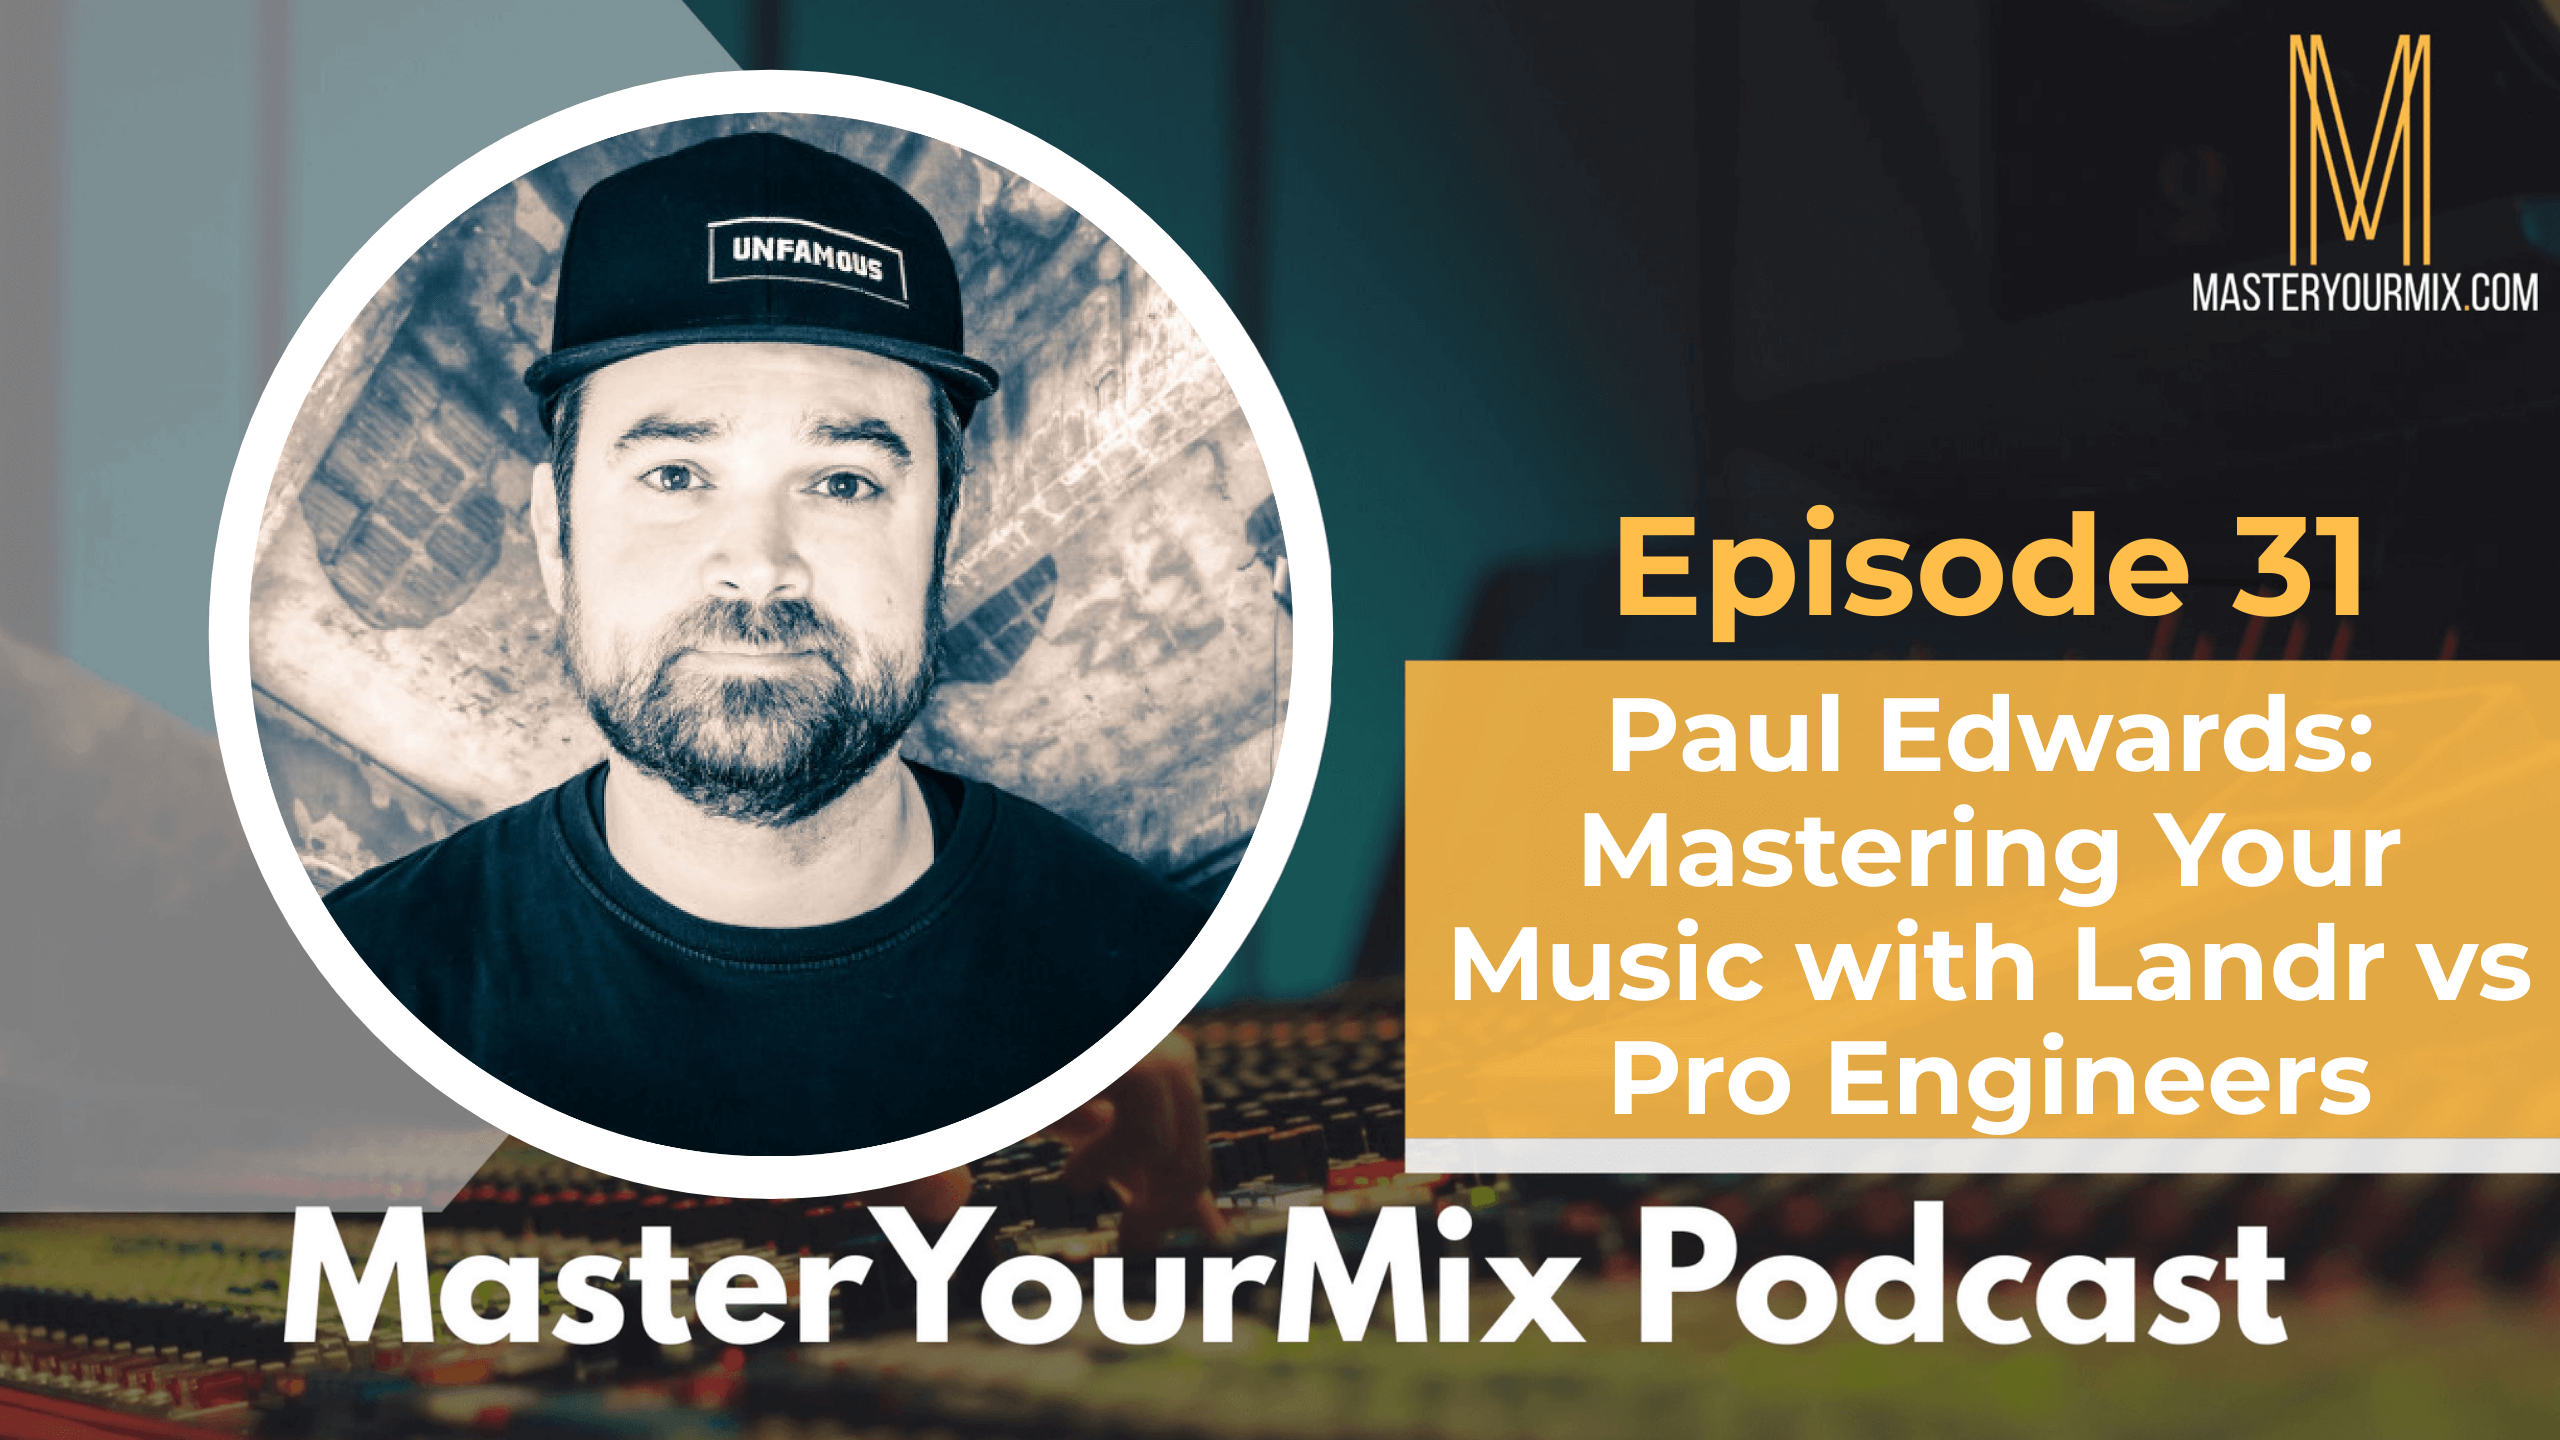 master your mix podcast, ep 31 paul edwards